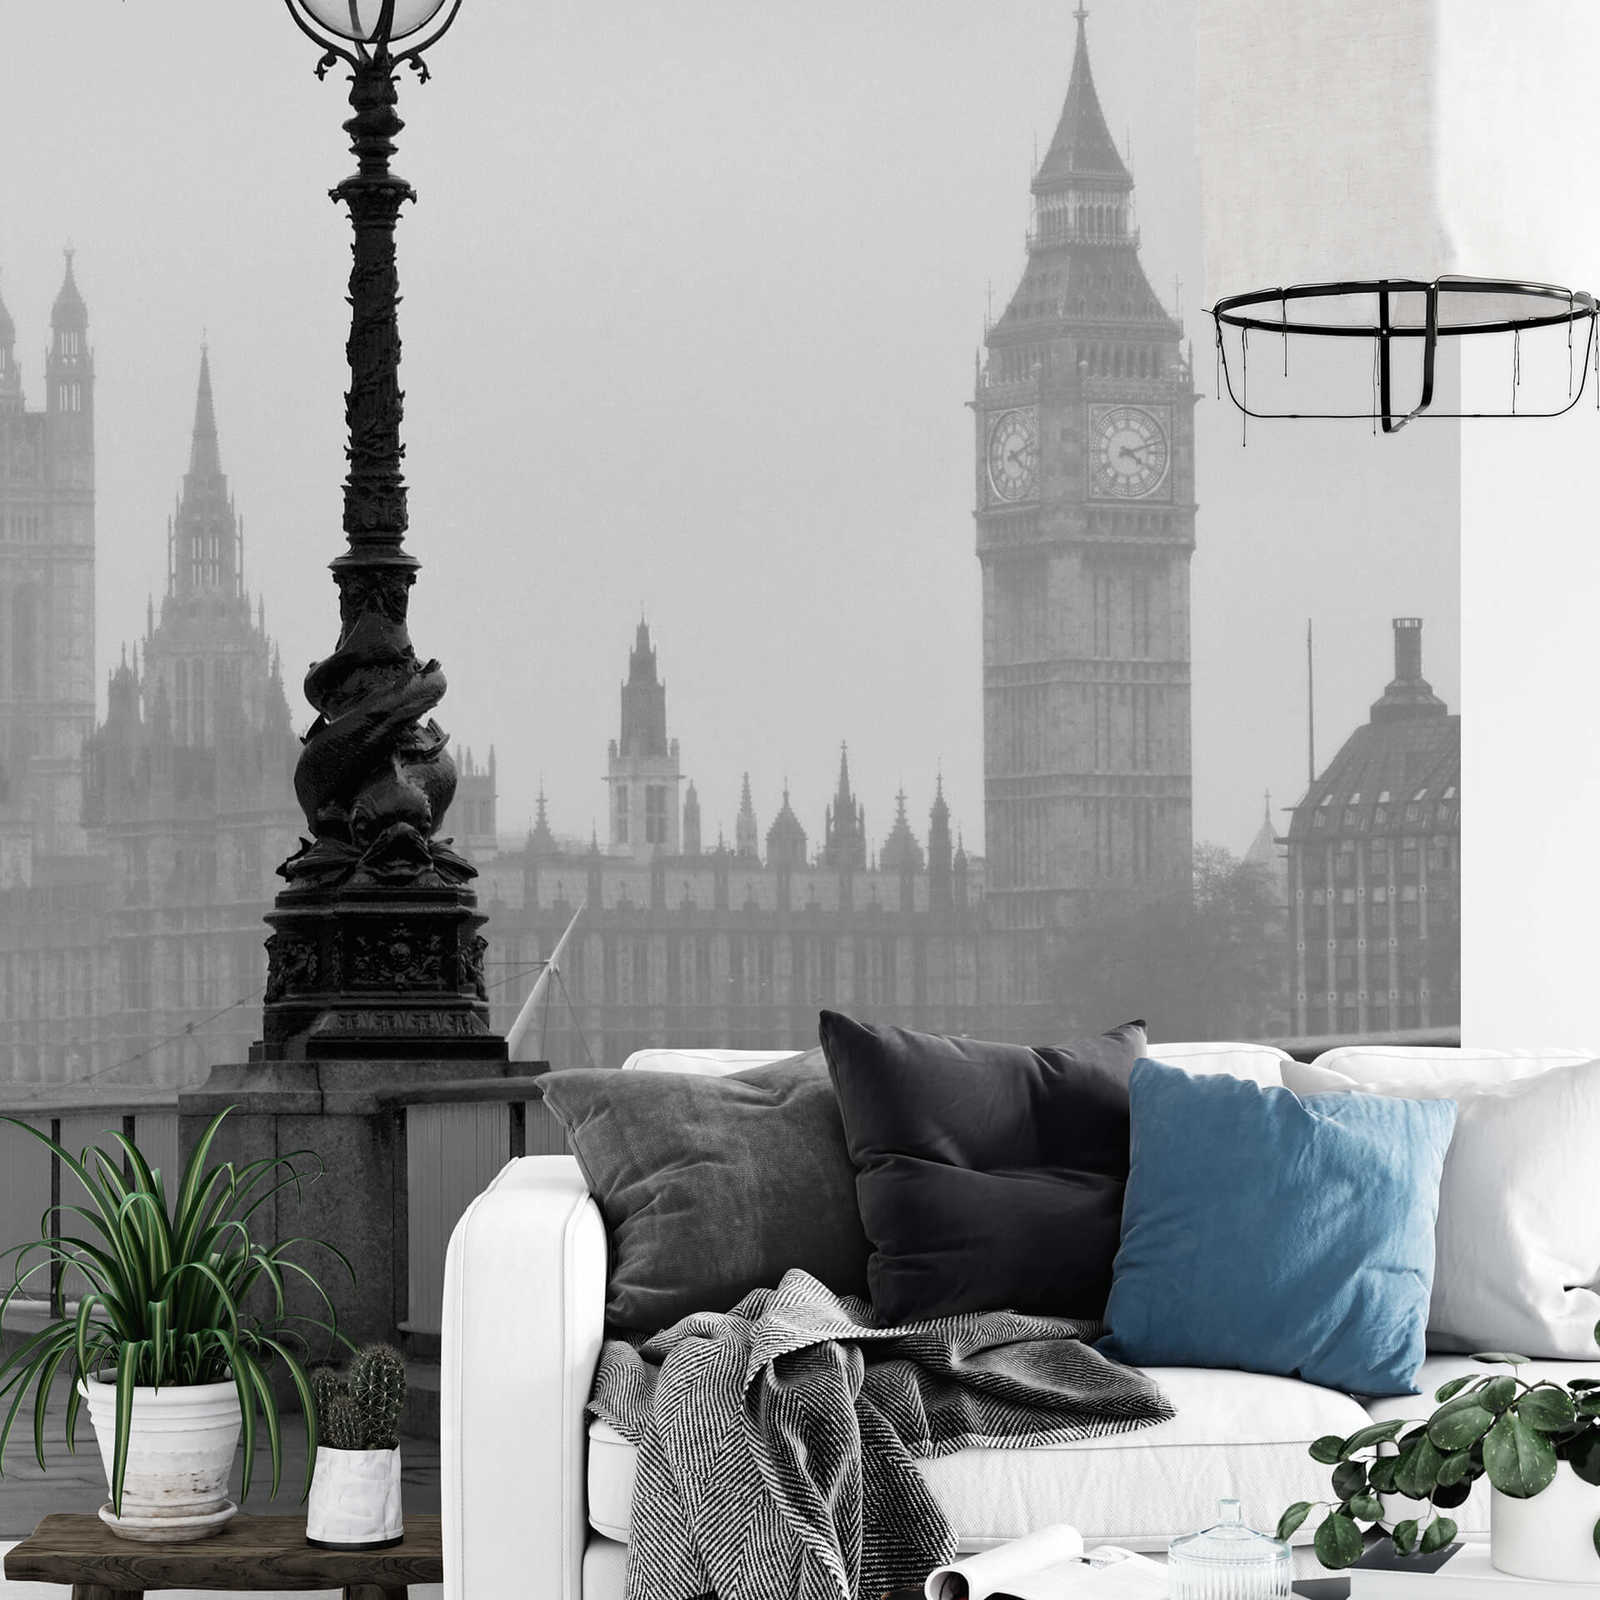             Photo wallpaper London city in the fog - black, white, grey
        